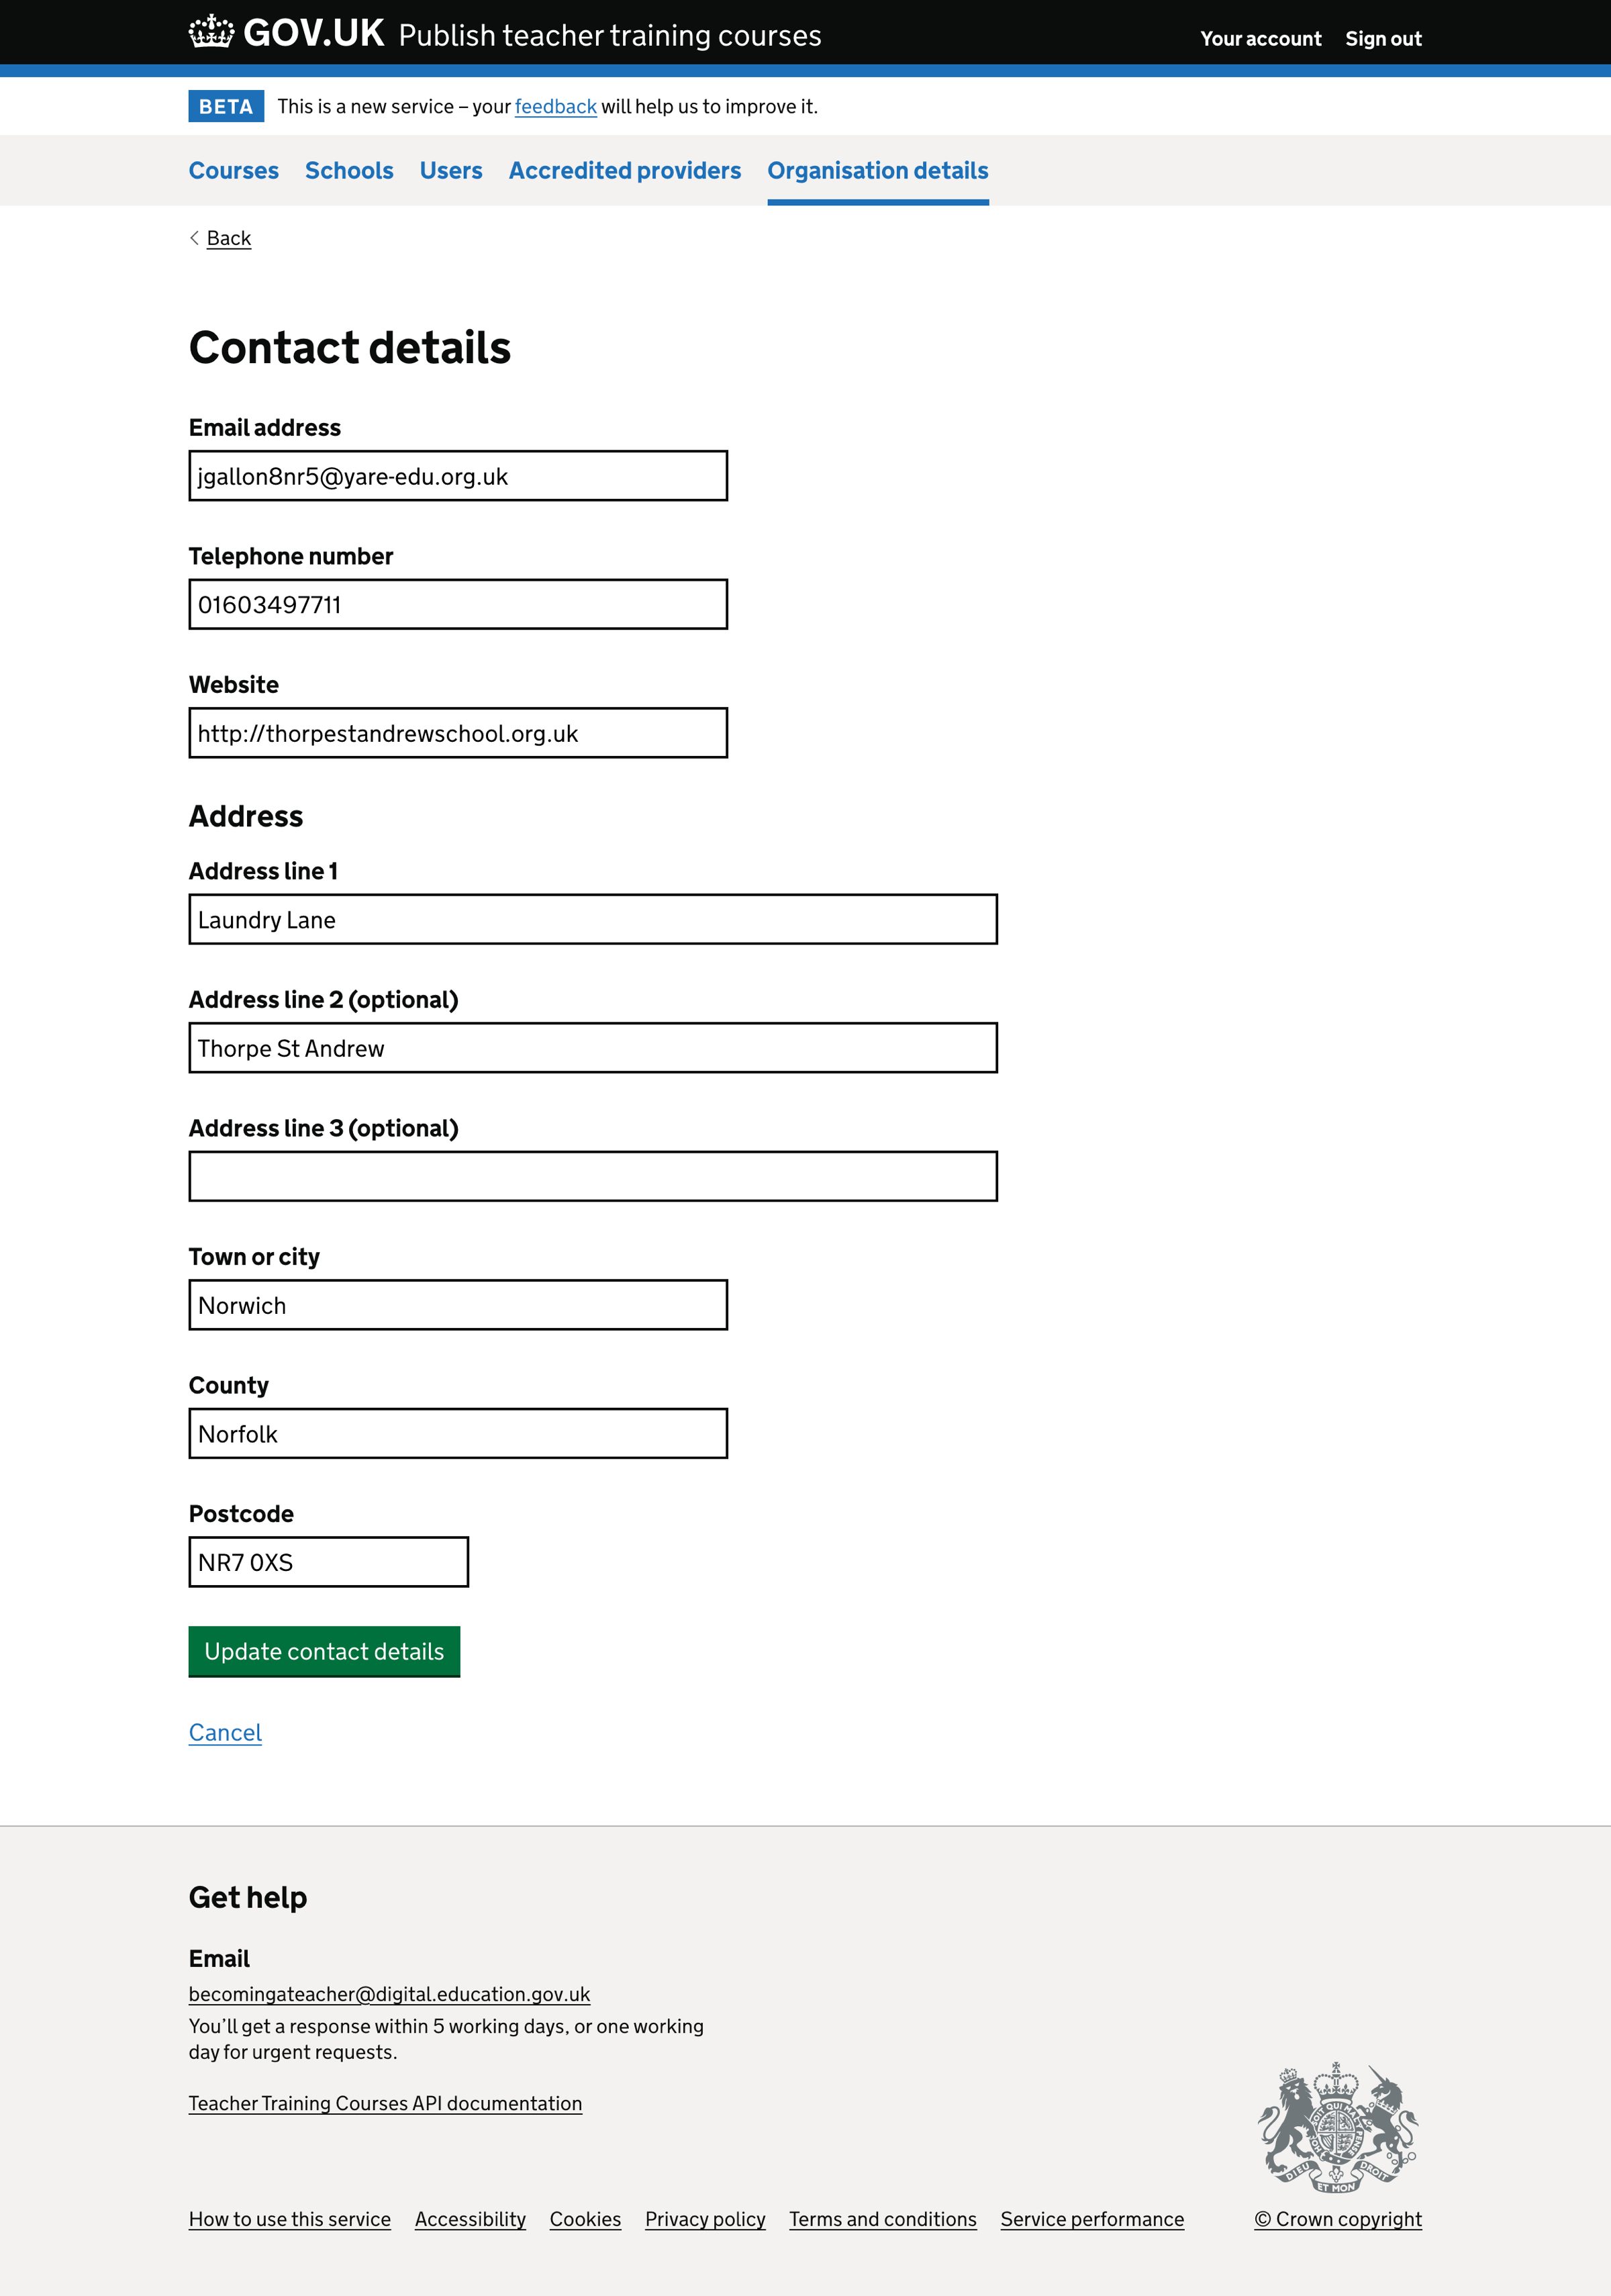 Screenshot of Organisation contact details